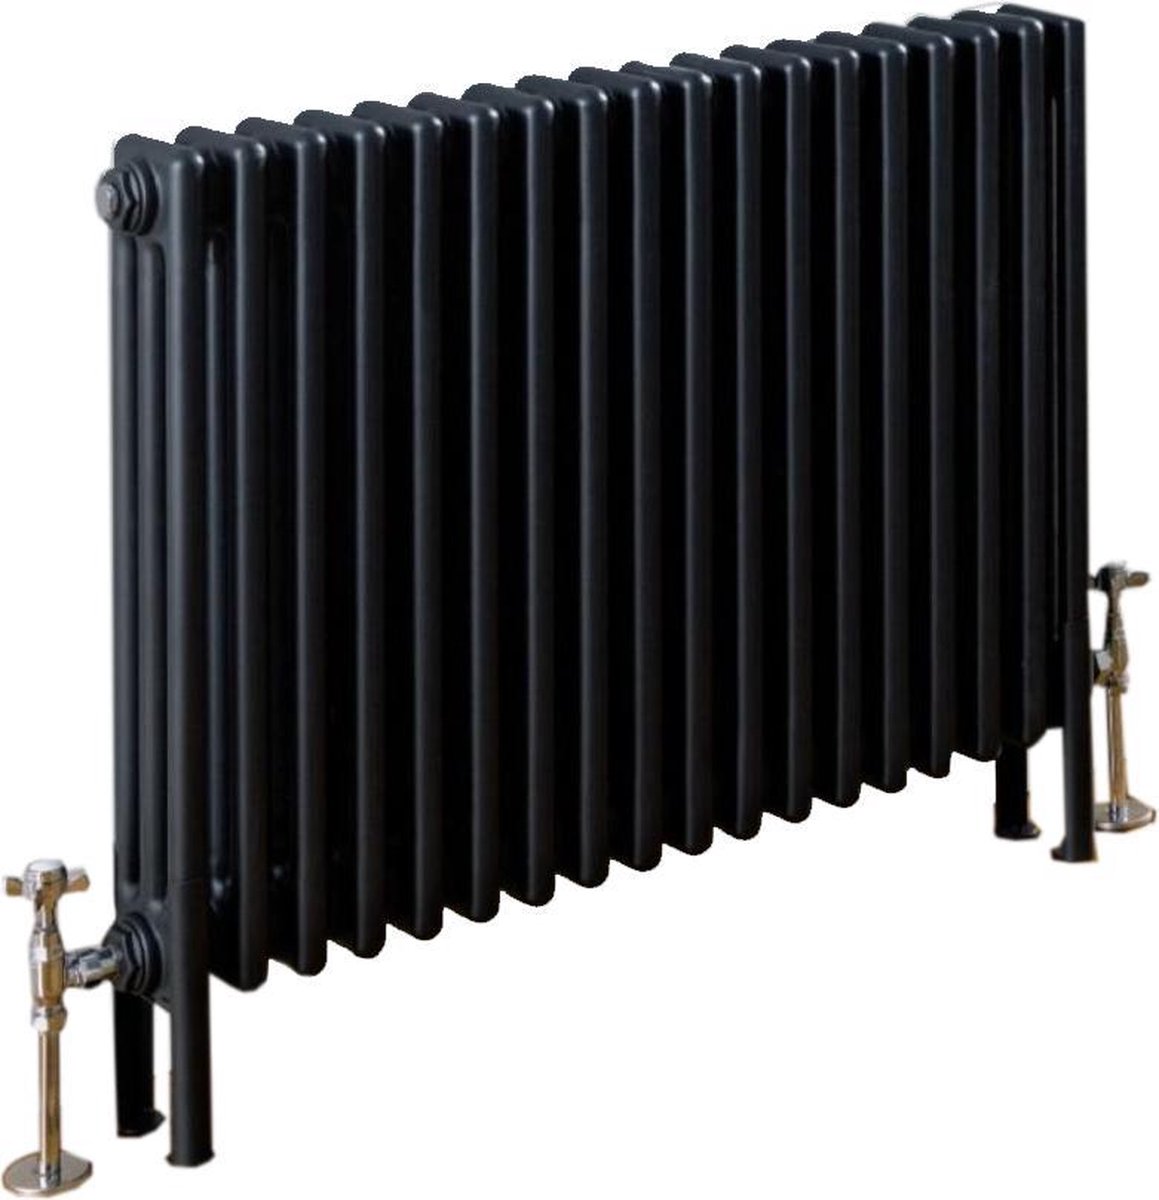 Design radiator horizontaal 2 kolom staal mat antraciet 60x83,3cm 1133 watt - Eastbrook Rivassa